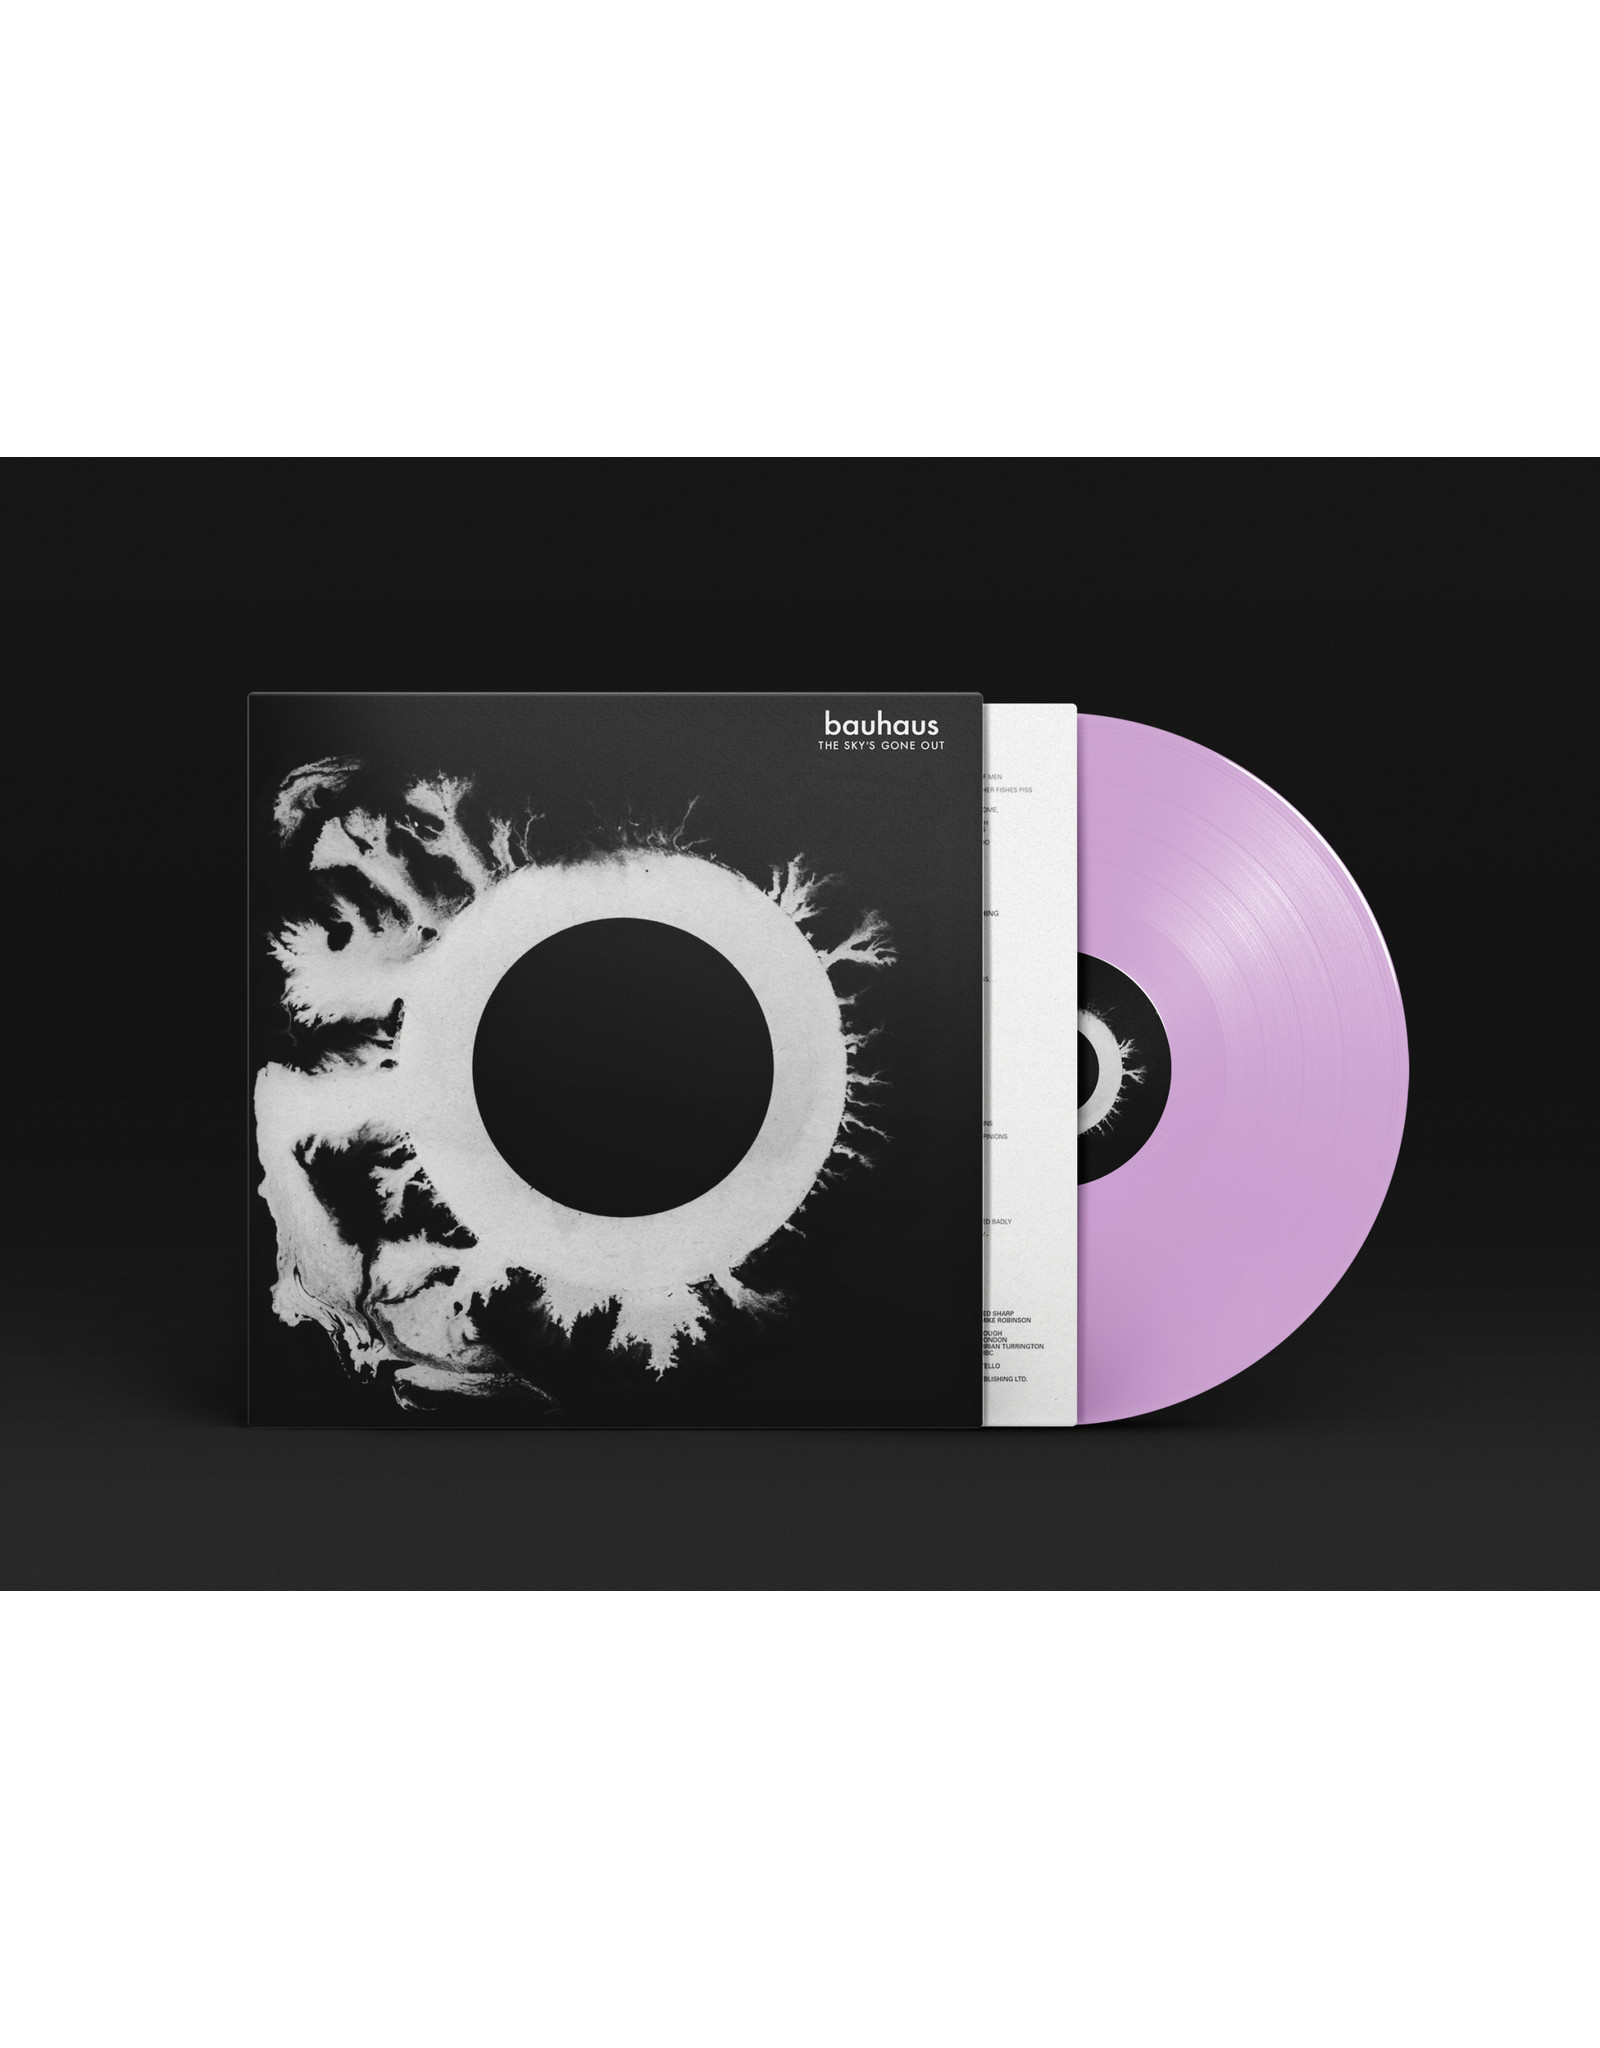 Bauhaus - Sky's Gone Out (Violet Vinyl)